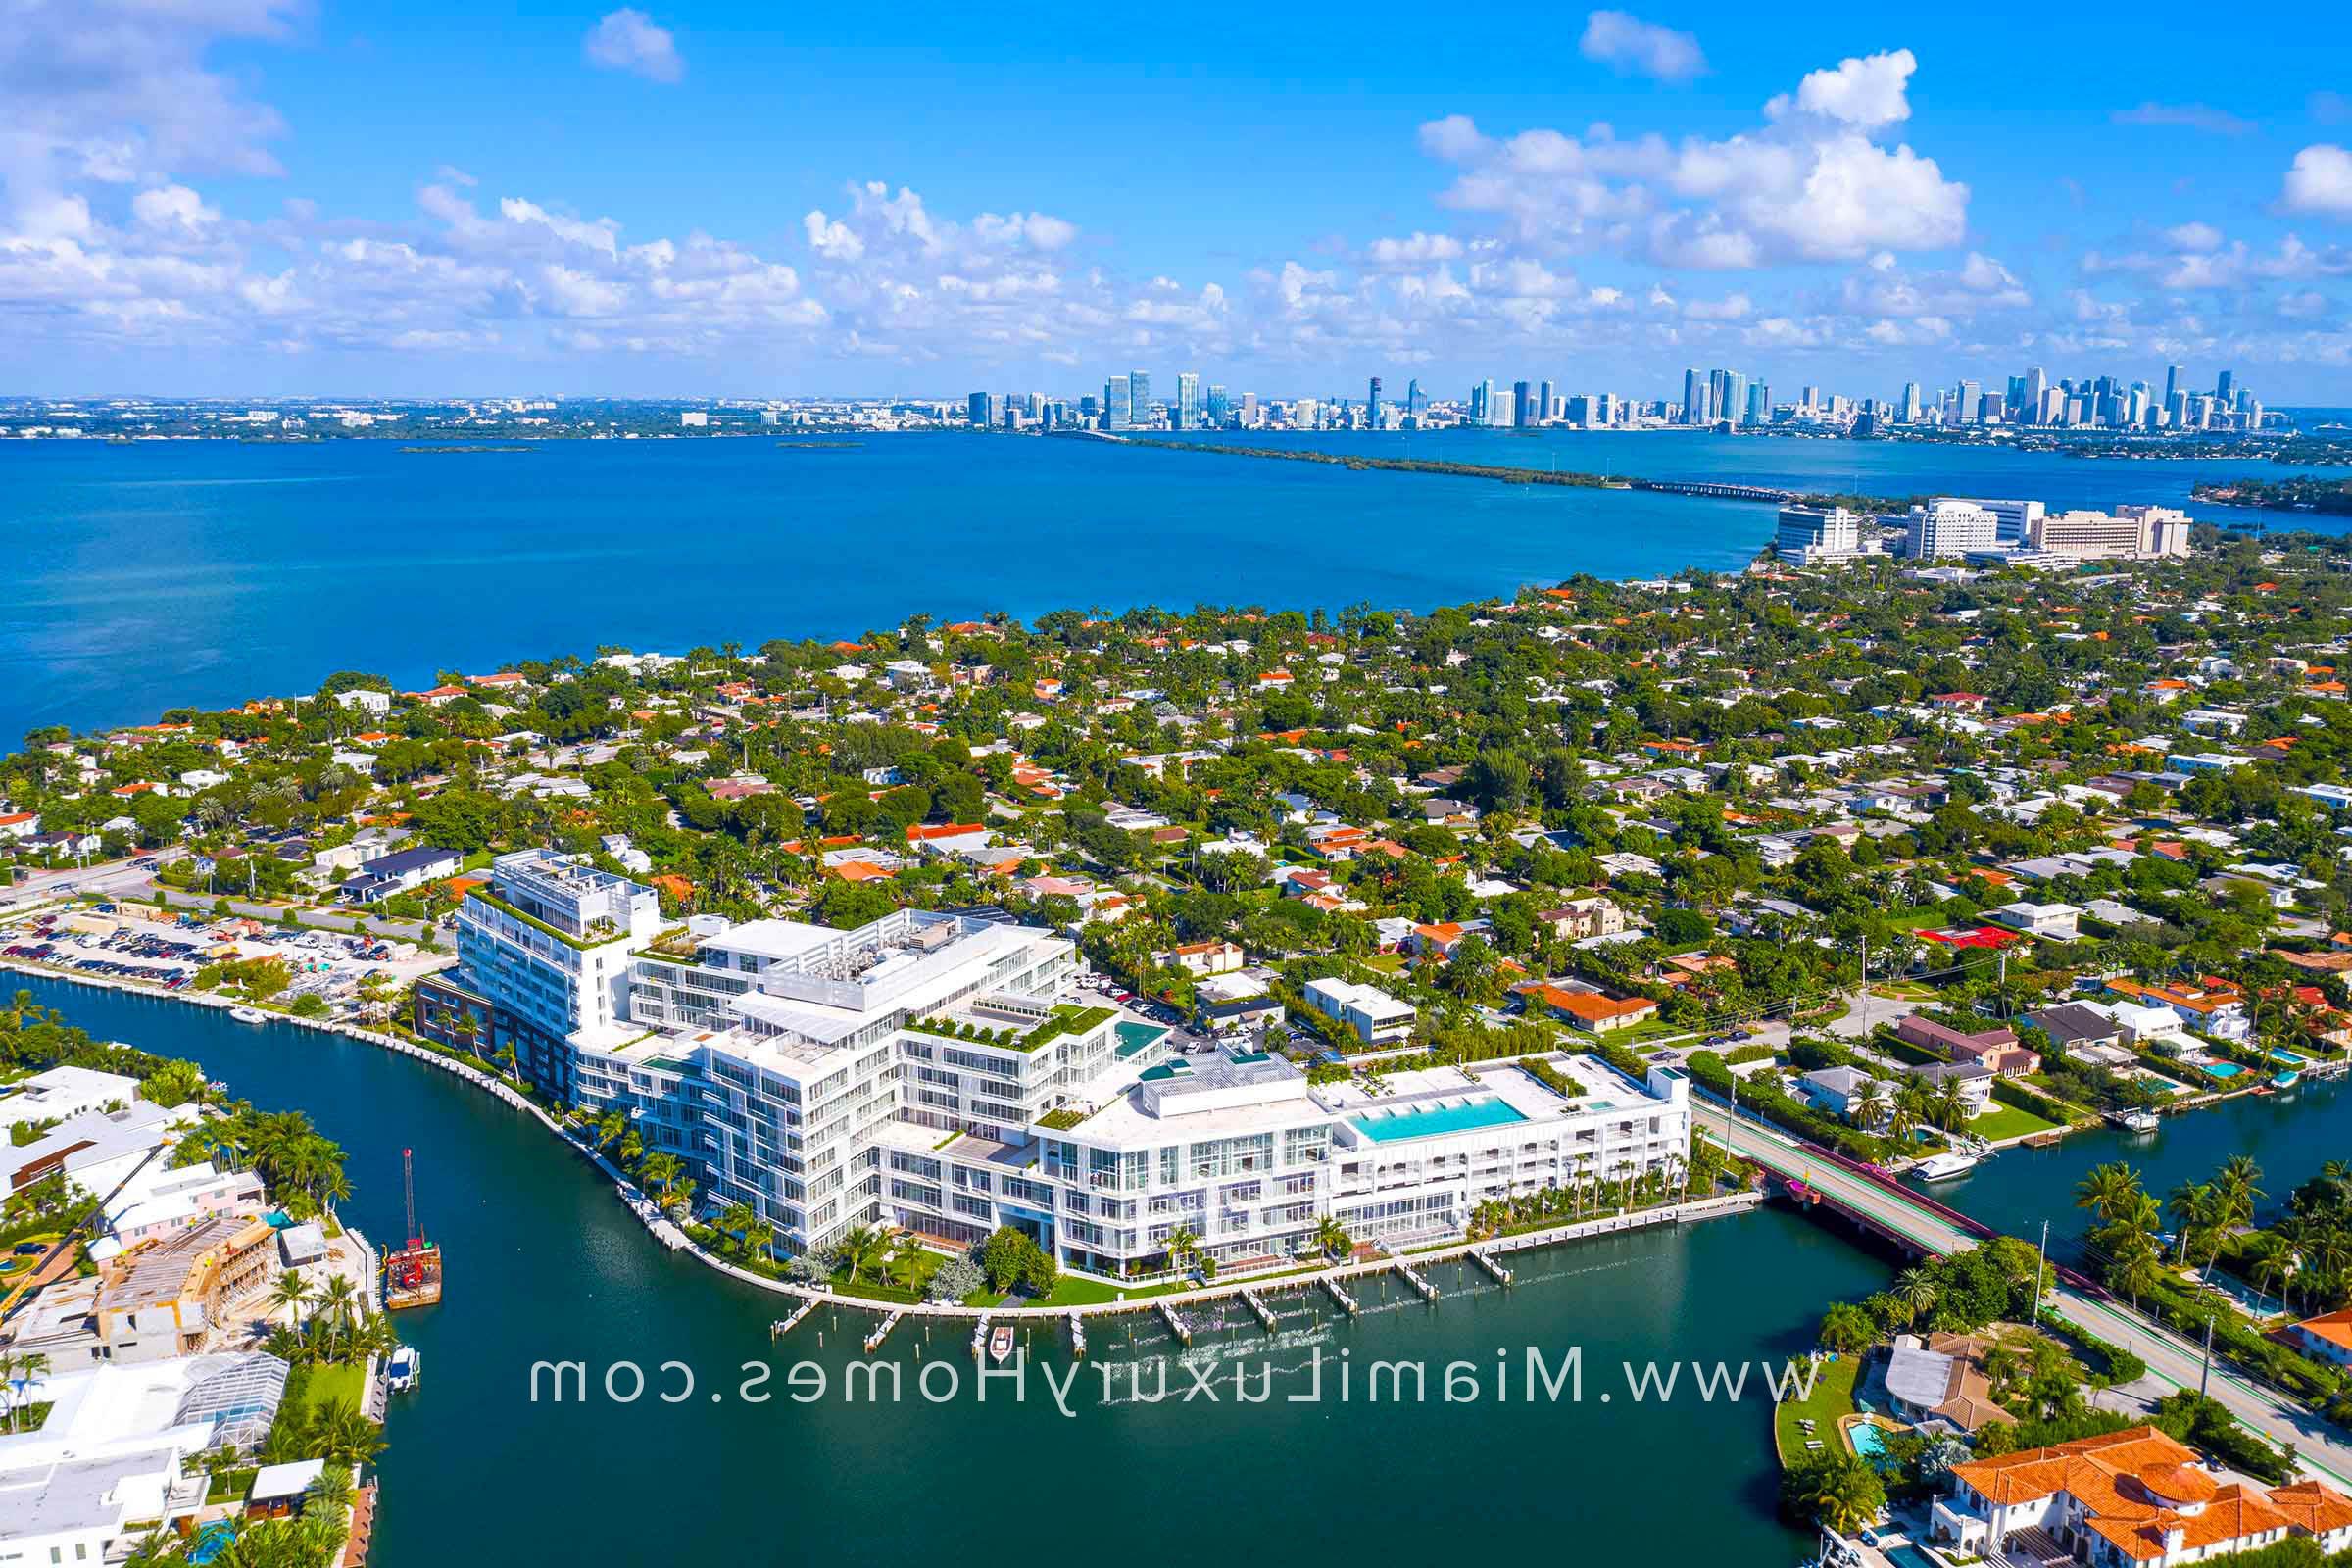 Aerial View of Ritz Carlton Condos in Miami Beach